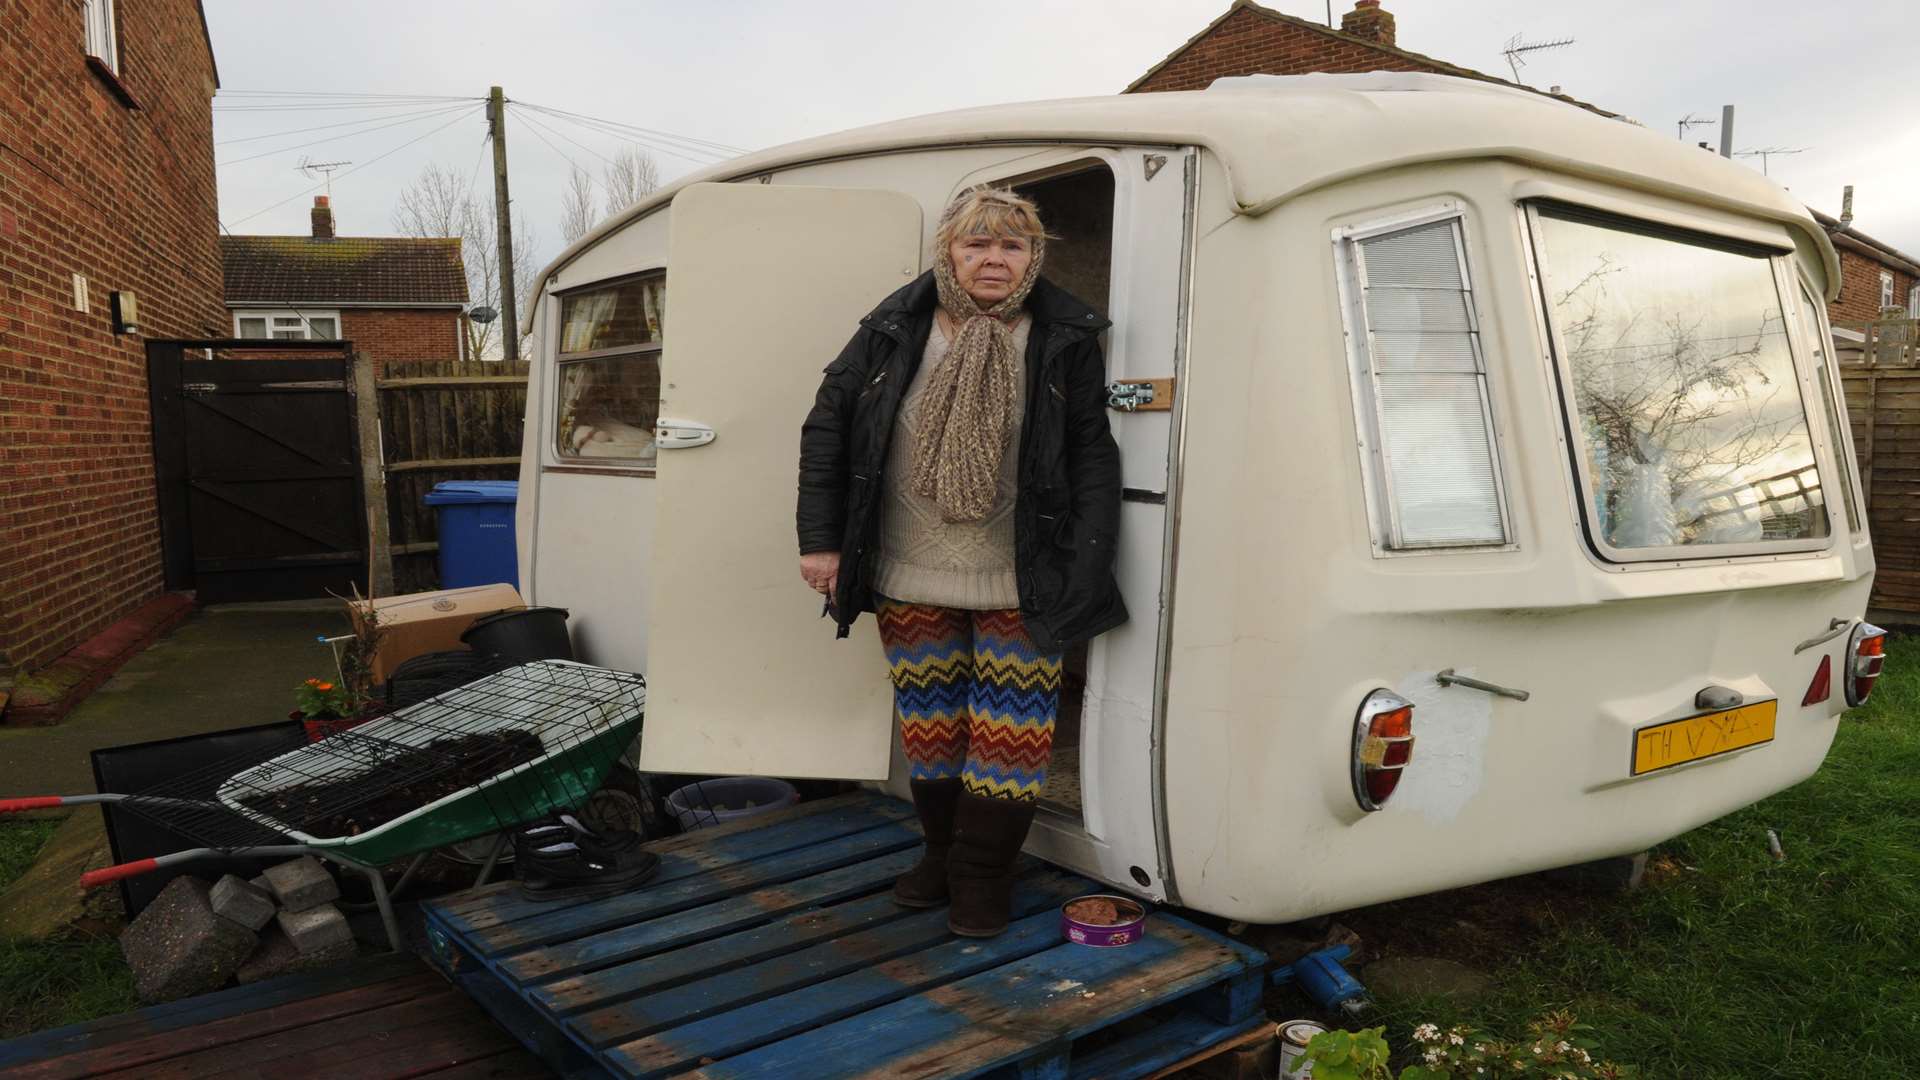 Tizzy Rose is living in this caravan. Picture: Steve Crispe